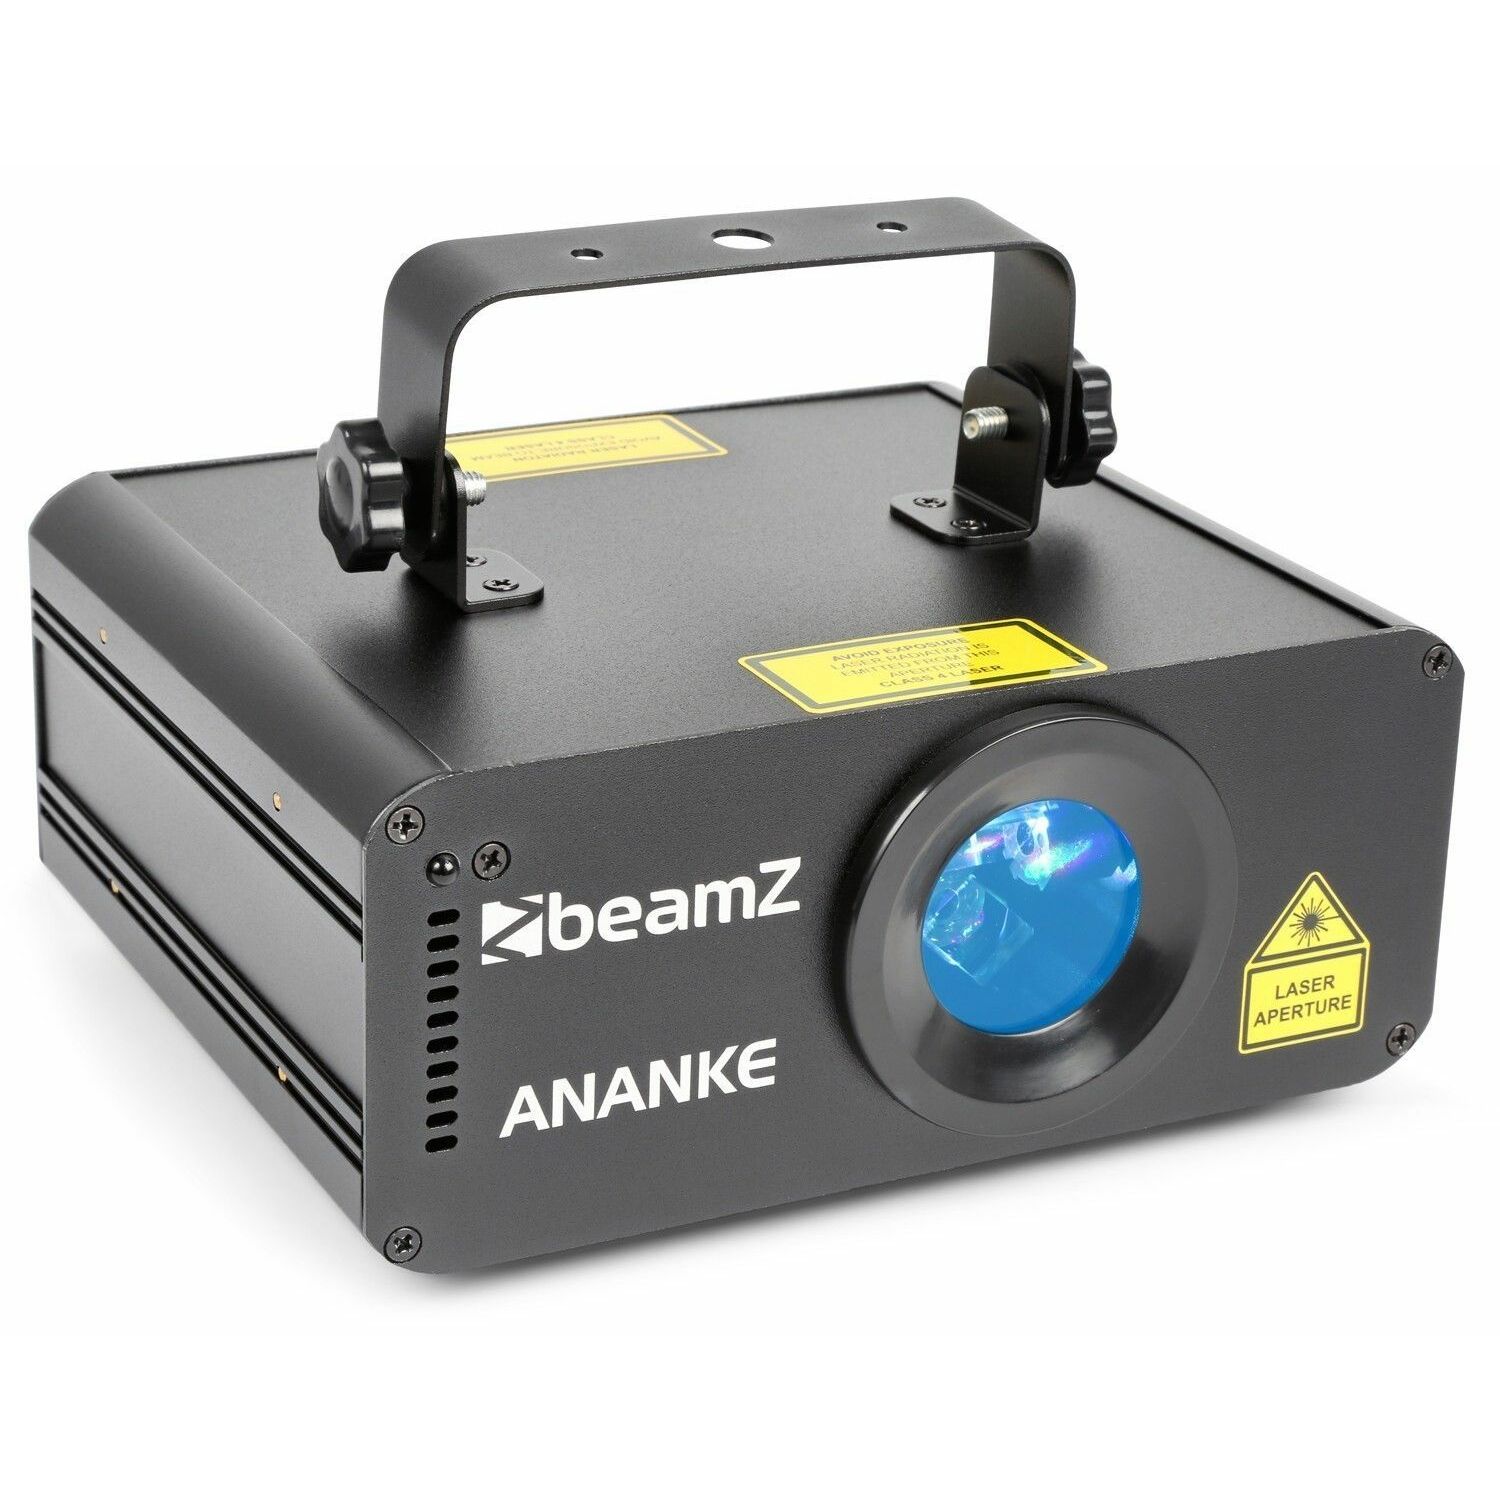 Retourdeal - BeamZ Ananke 3D RGB laser 600mW incl. remote